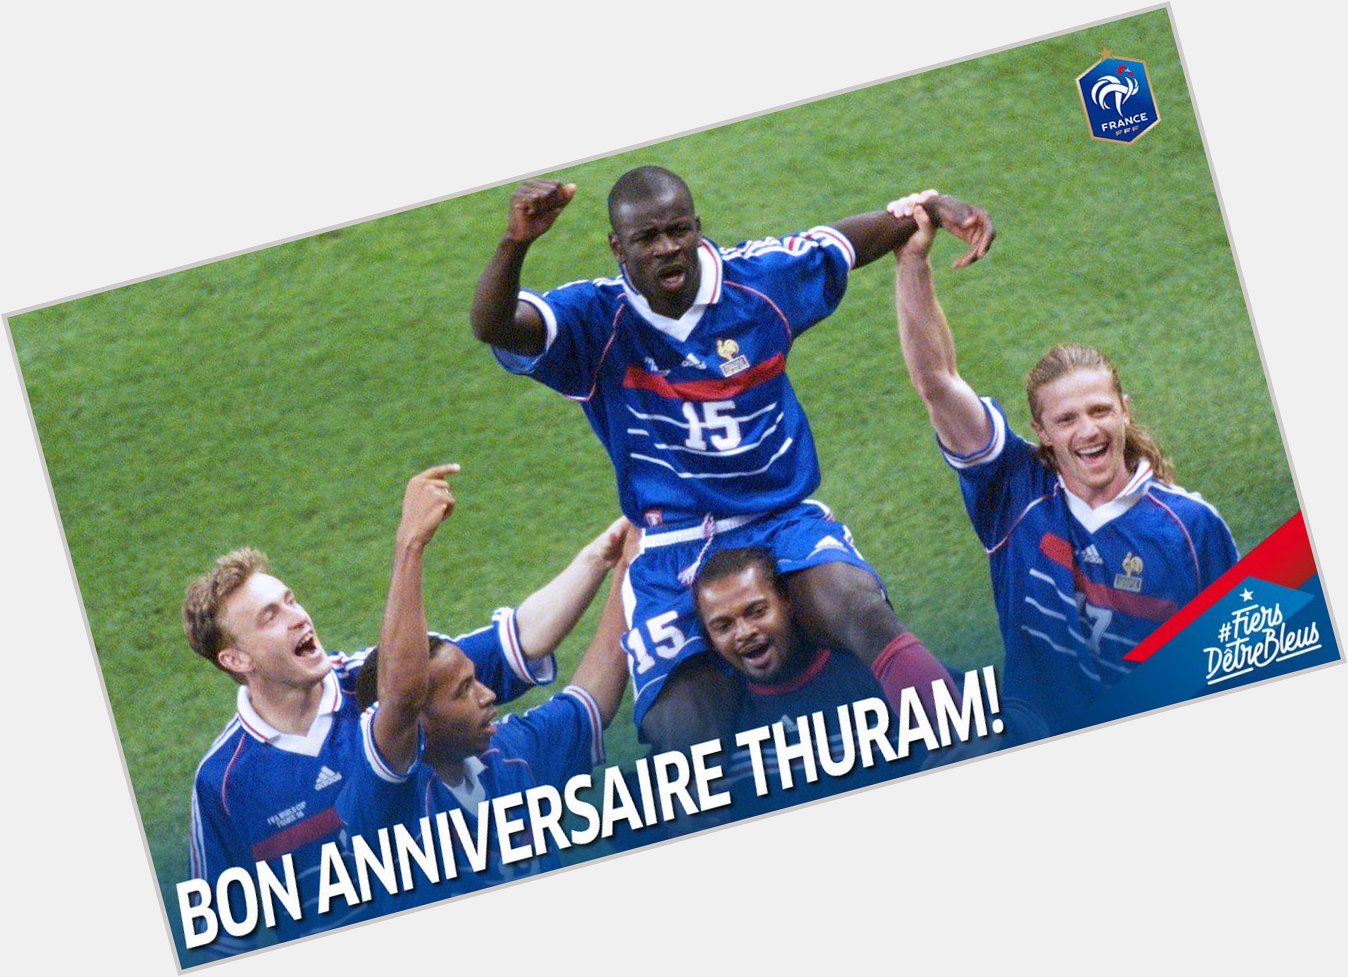 Happy birthday Lilian Thuram
Best defender I have seen   